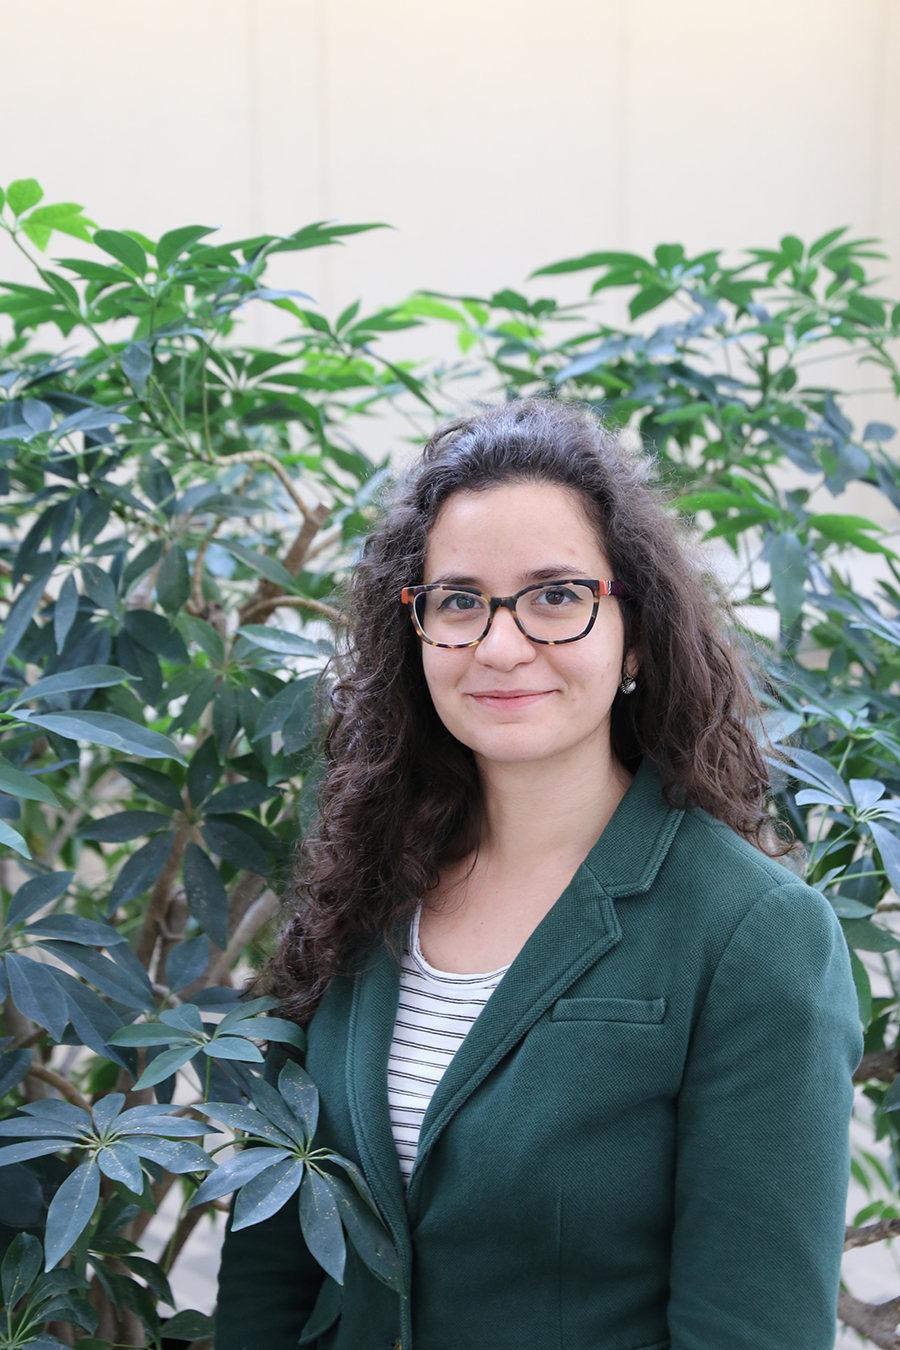 Lynn Abdouni, CED PhD candidate, to attend Lebanon Dissertation Institute